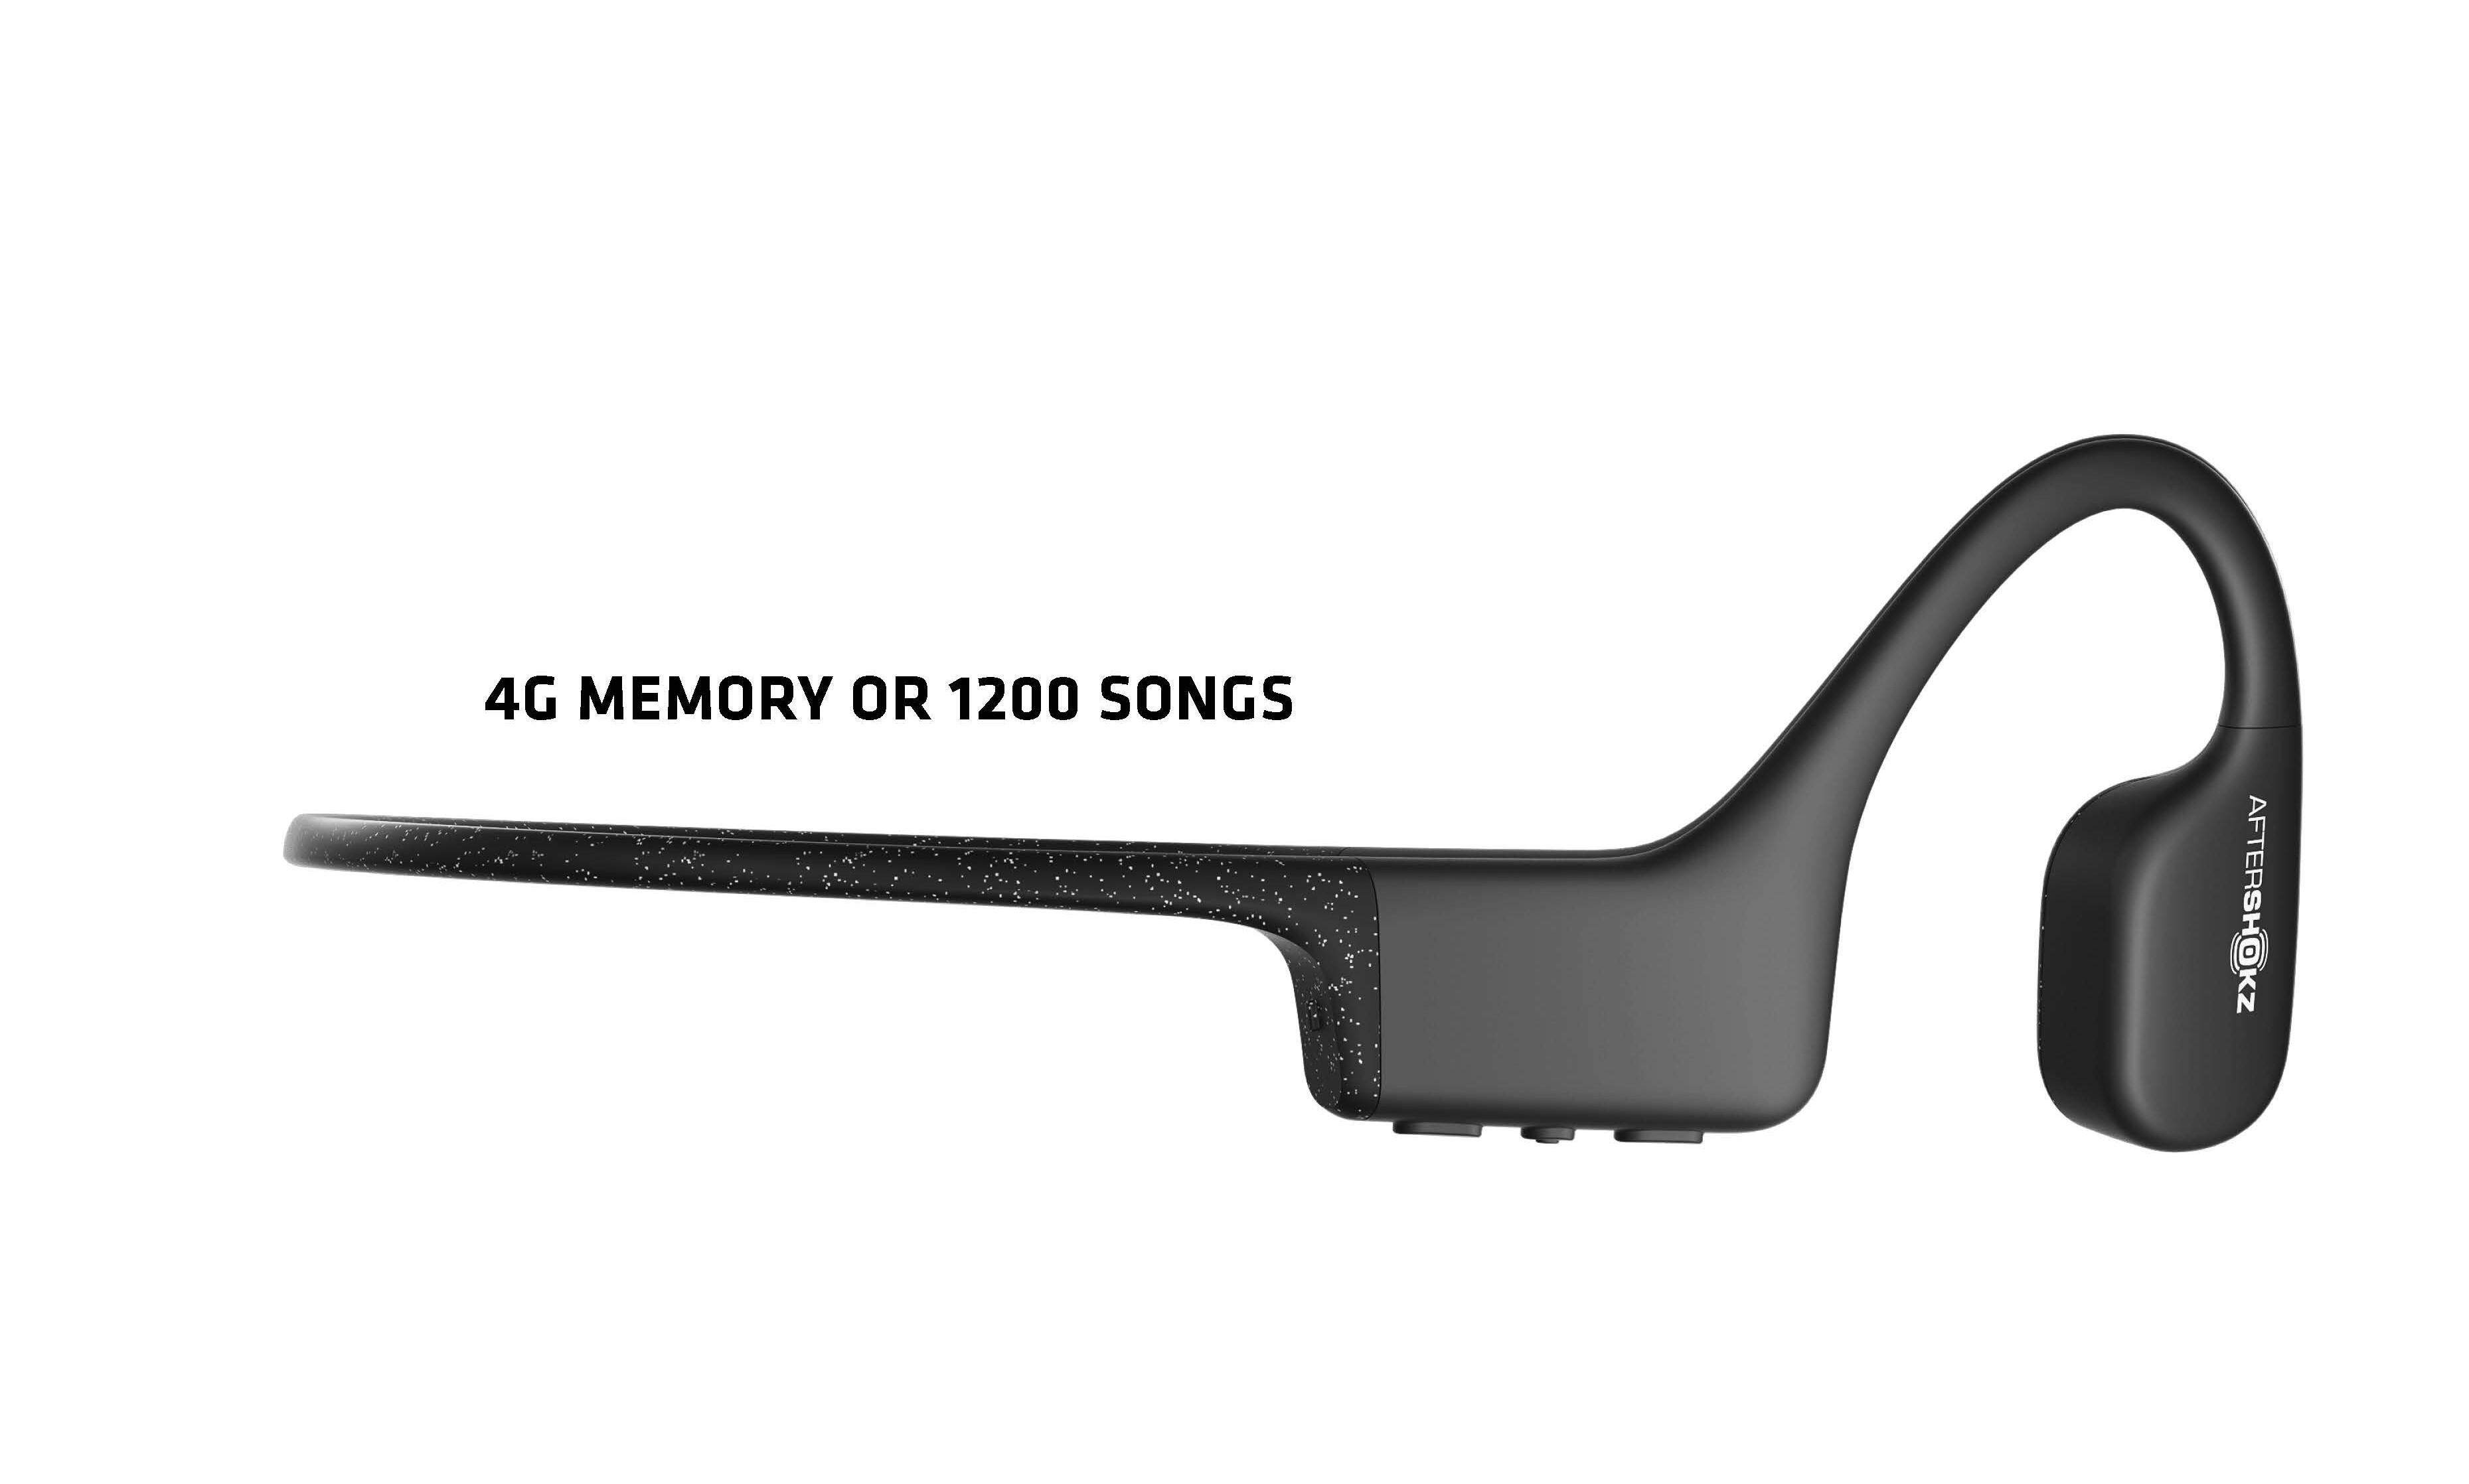  AfterShokz Xtrainerz IP68 Waterproof Wireless Bone Conduction MP3 Headphones with 4GB Memory